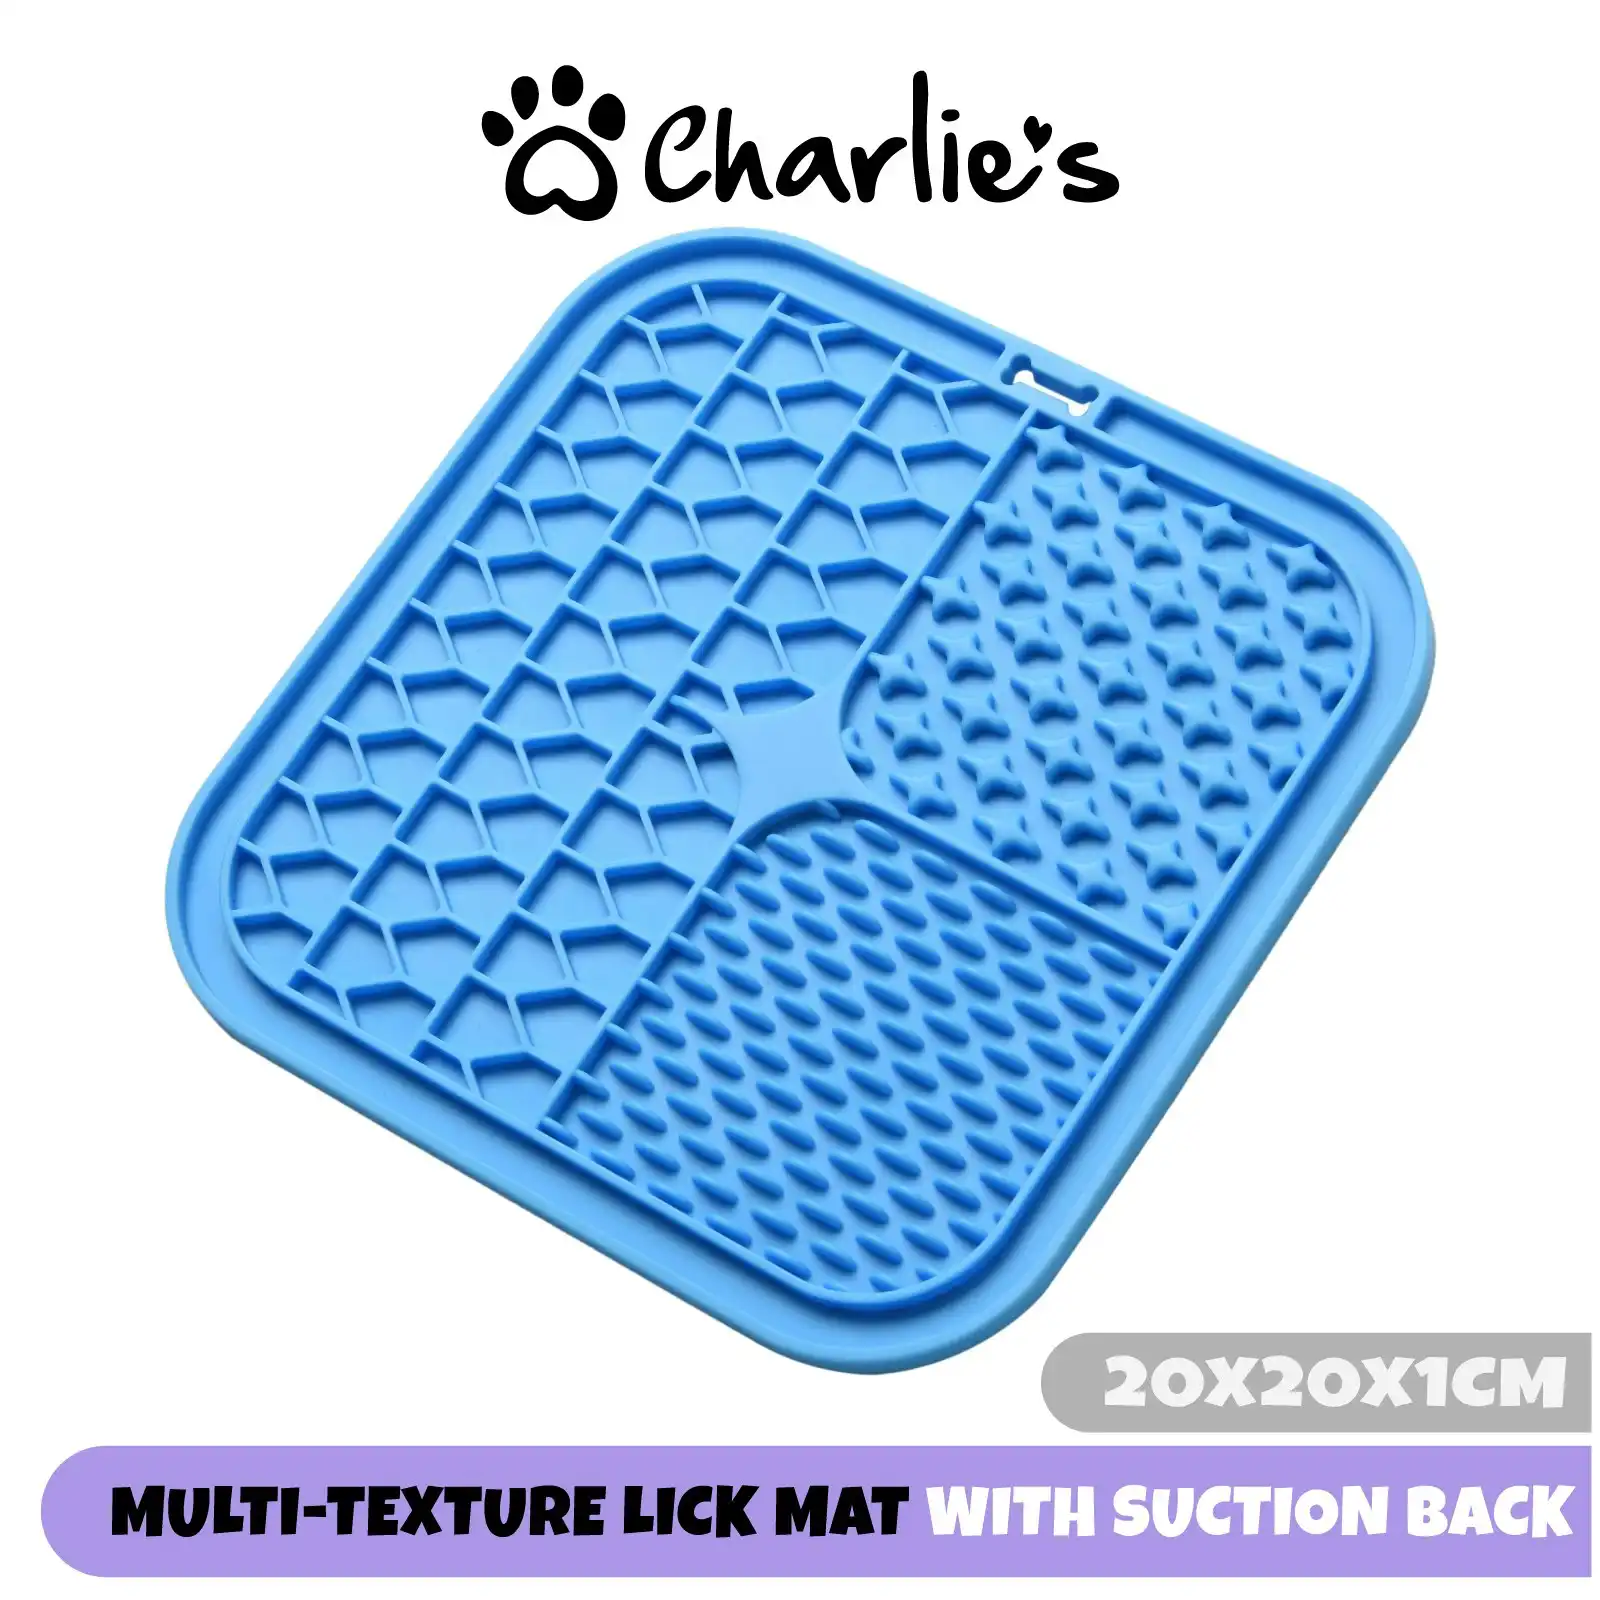 Charlie’s Shlurp Multi-Texture Lick Mat With Suction Back Blue 20x20x1cm